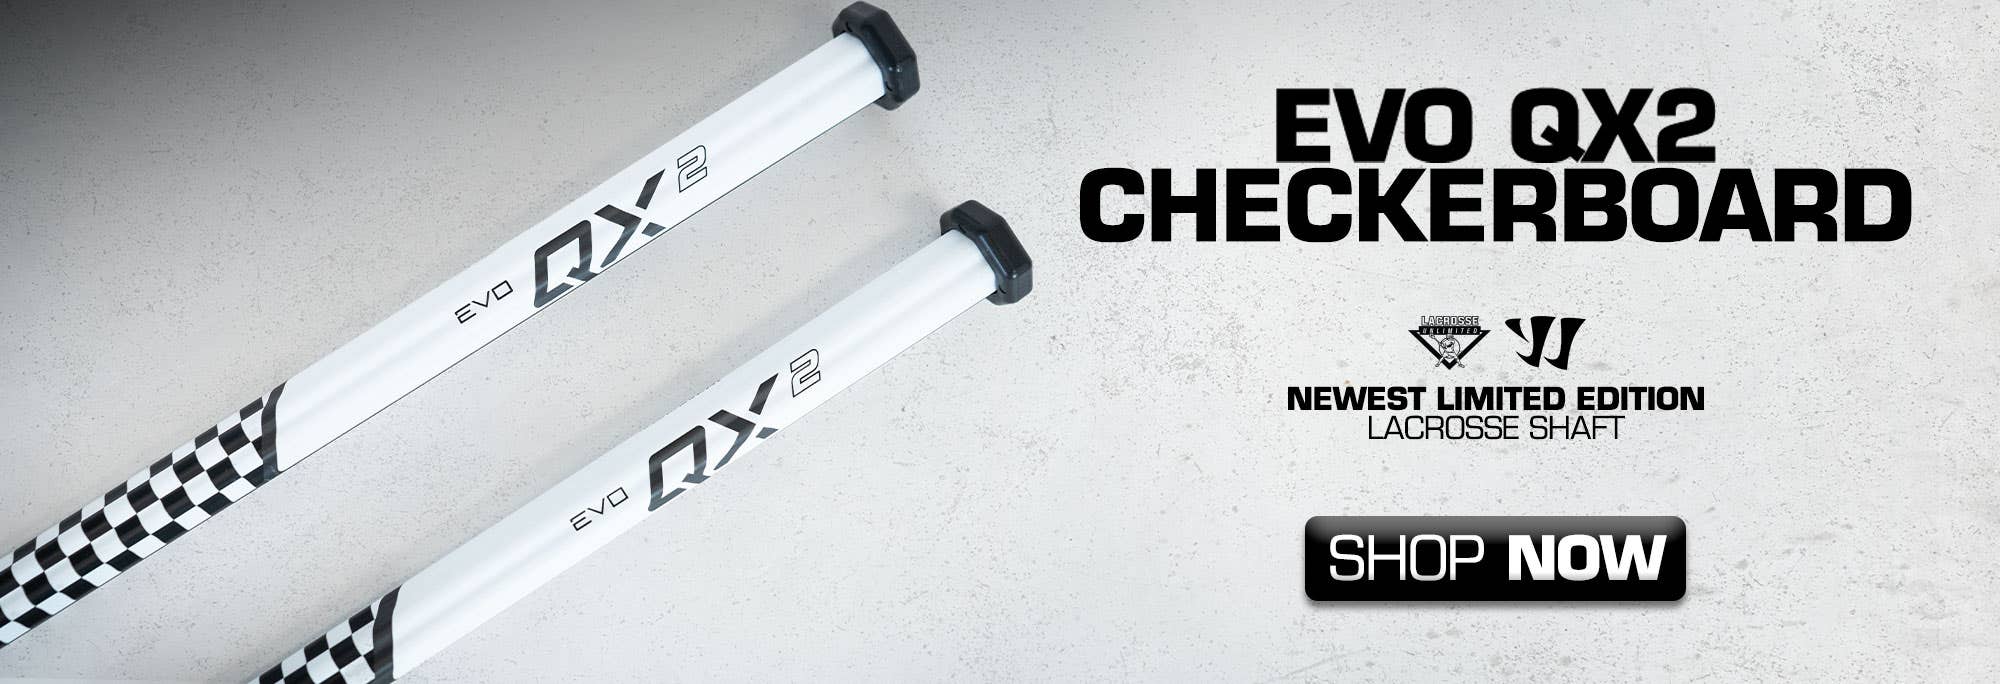 EVO QX2 Checkerboard Limited Edition Lacrosse Shaft